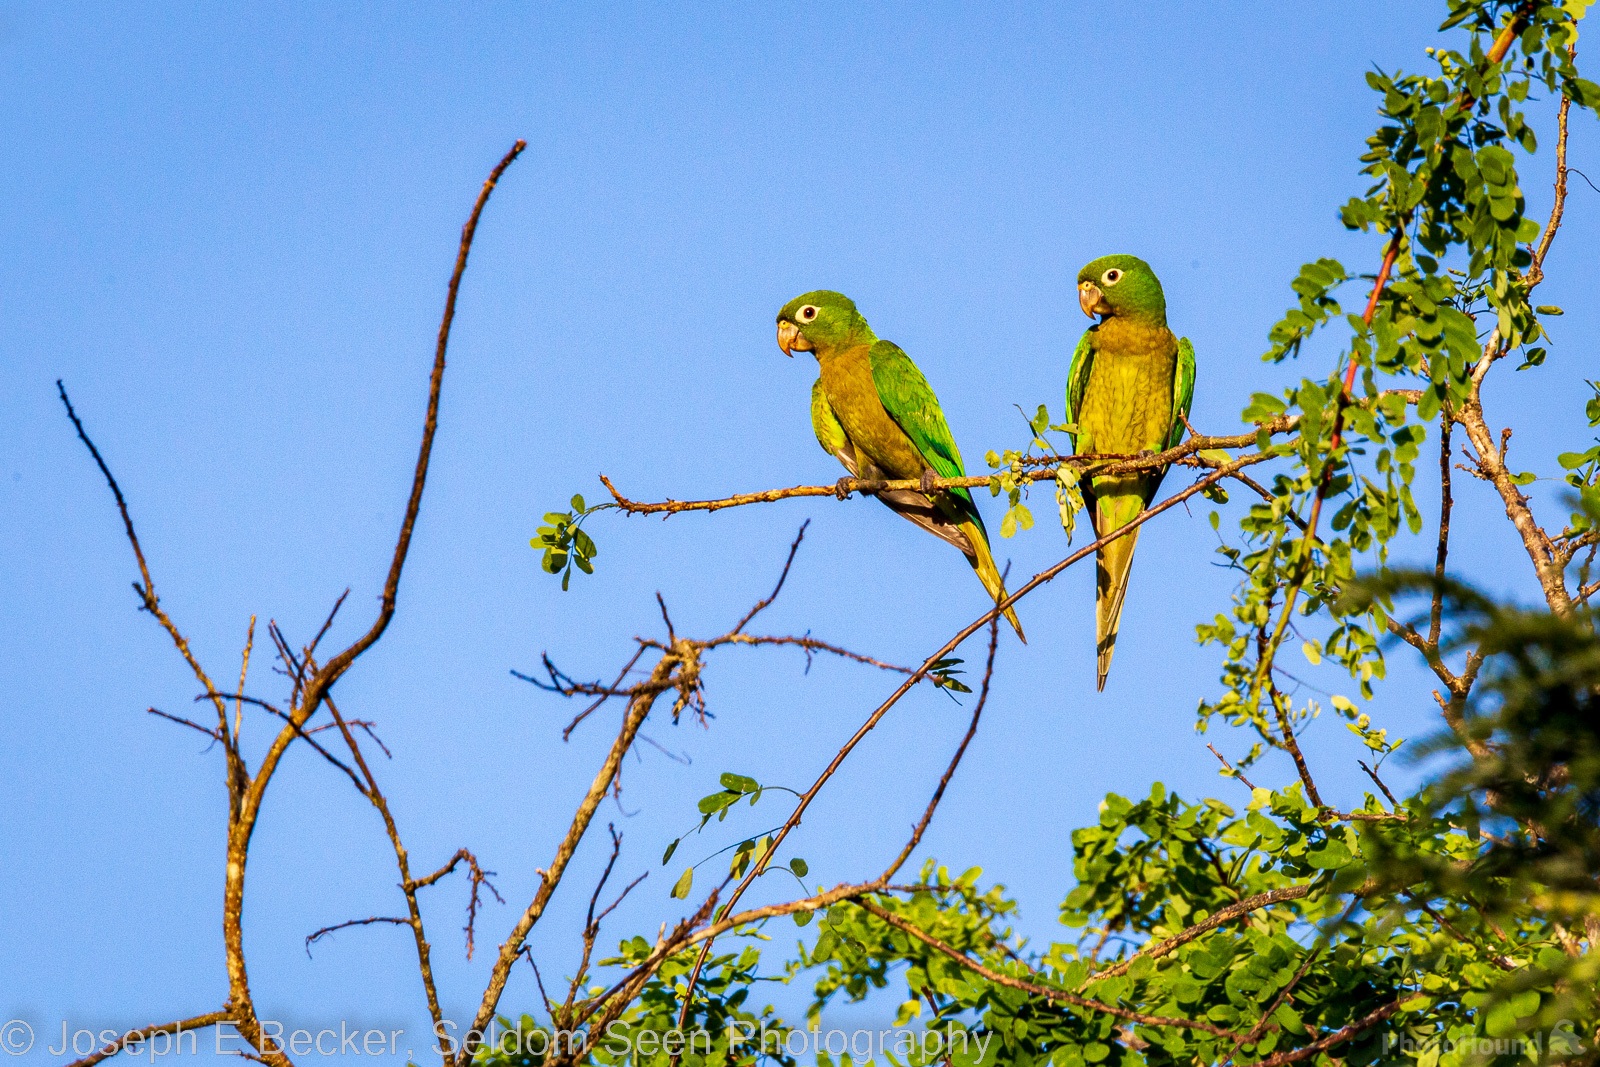 Image of Lamanai Area Birdwatching by Joe Becker